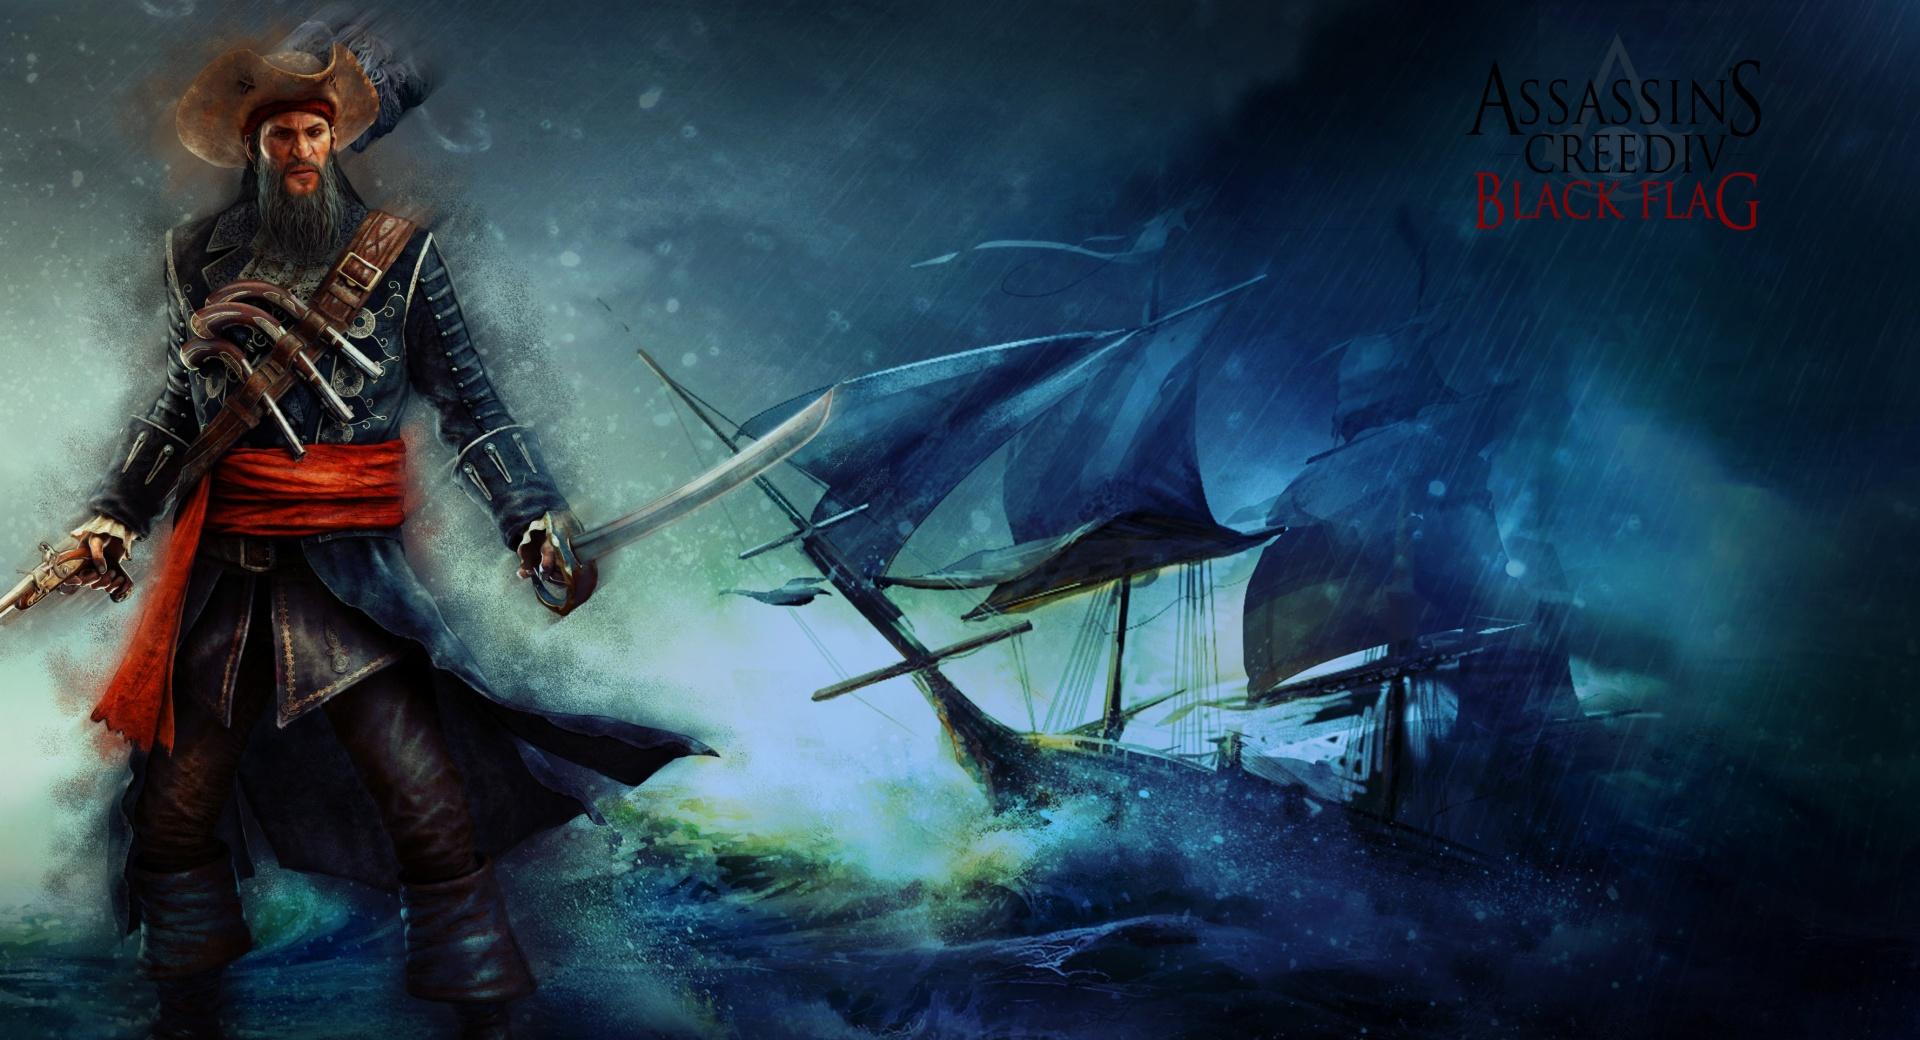 Assassins Creed IV Black Flag Blackbeard at 1600 x 1200 size wallpapers HD quality